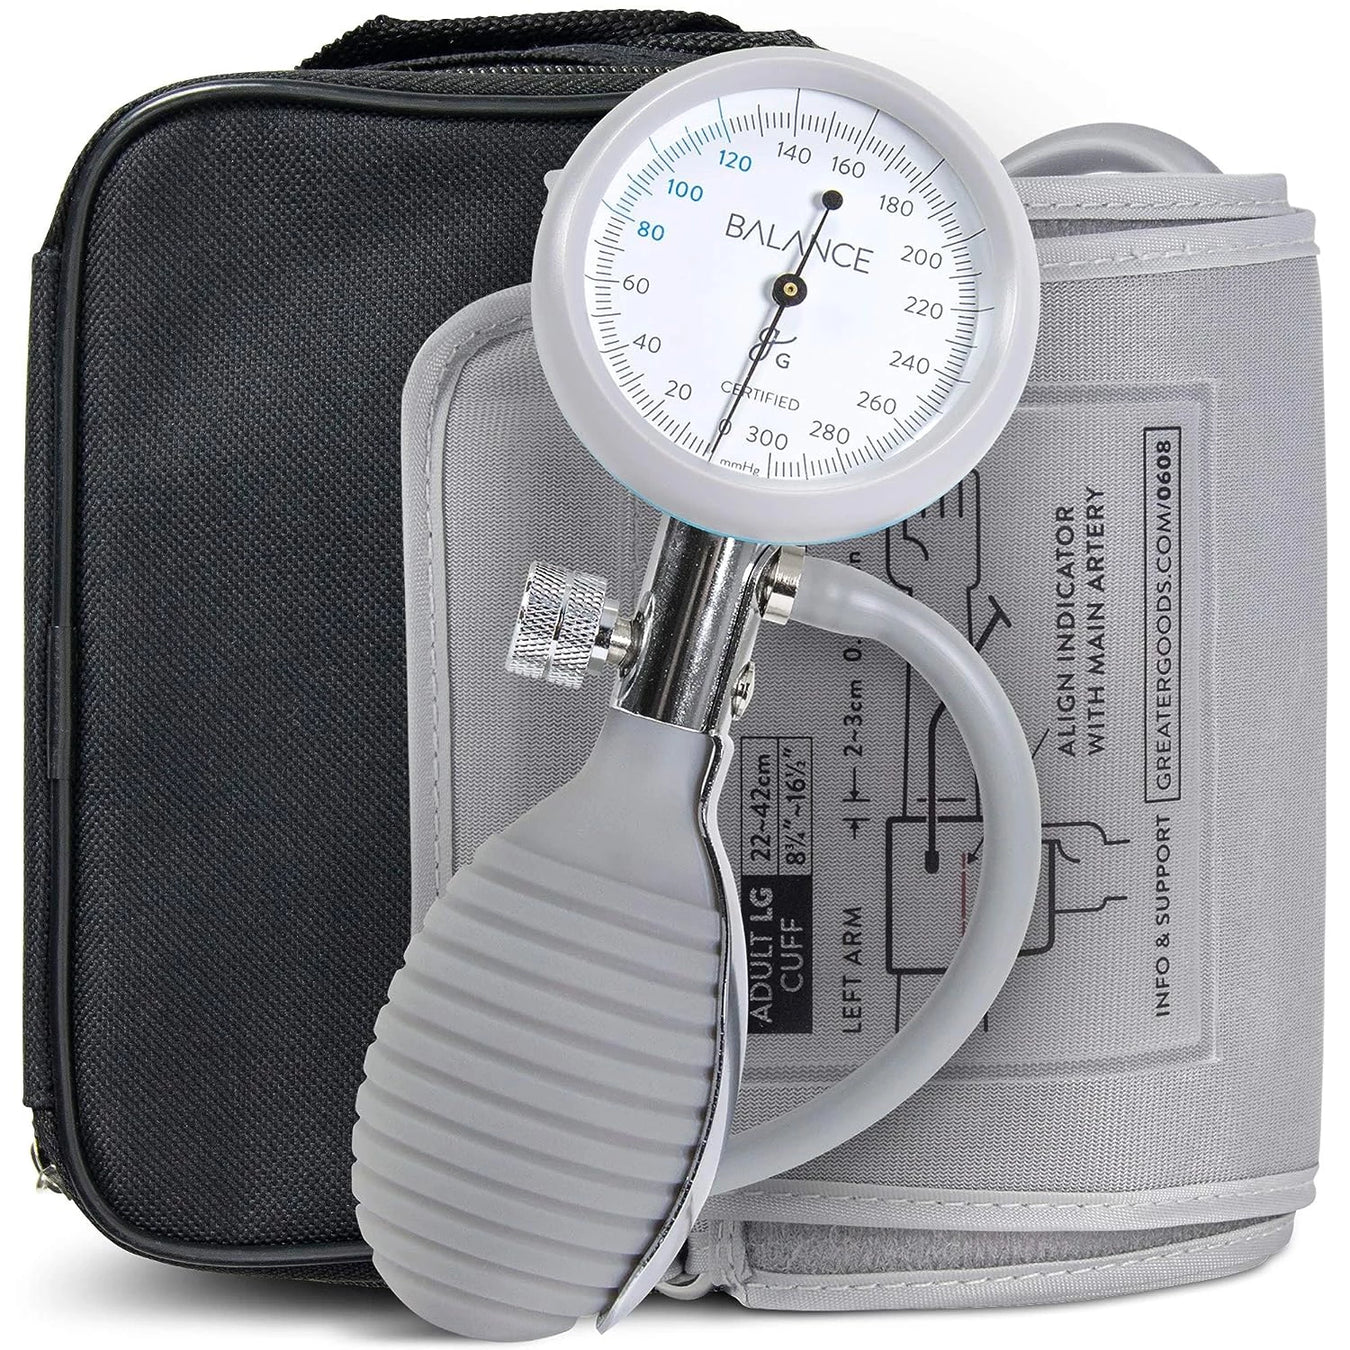 Blood Pressure Aneroids and Cuffs